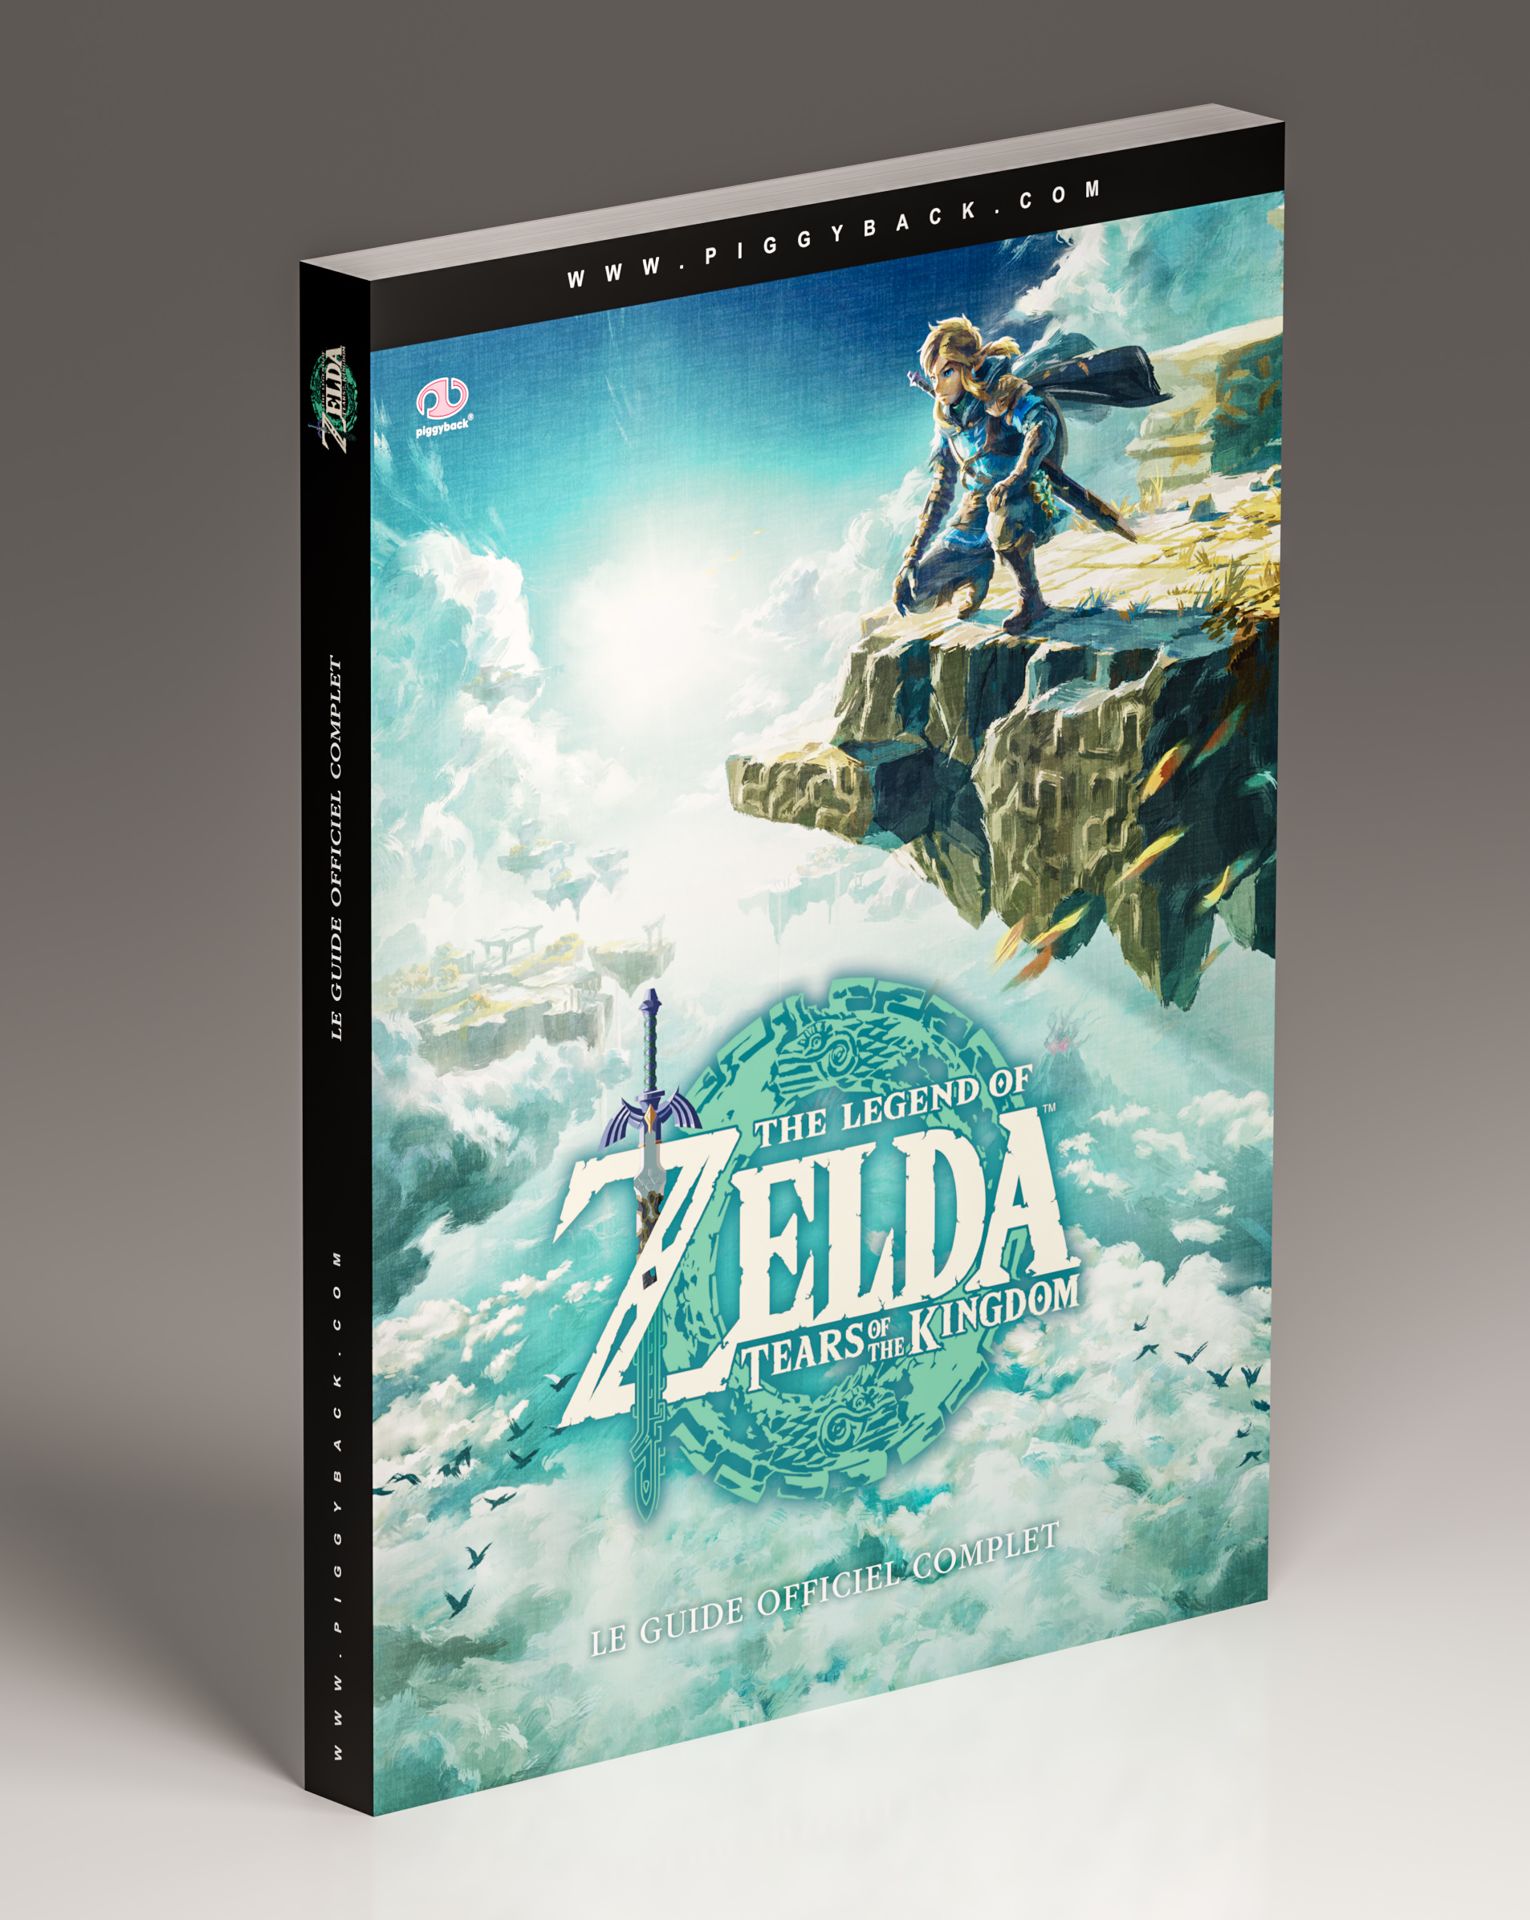 The Legend of Zelda: Tears of the Kingdom - Le guide officiel co